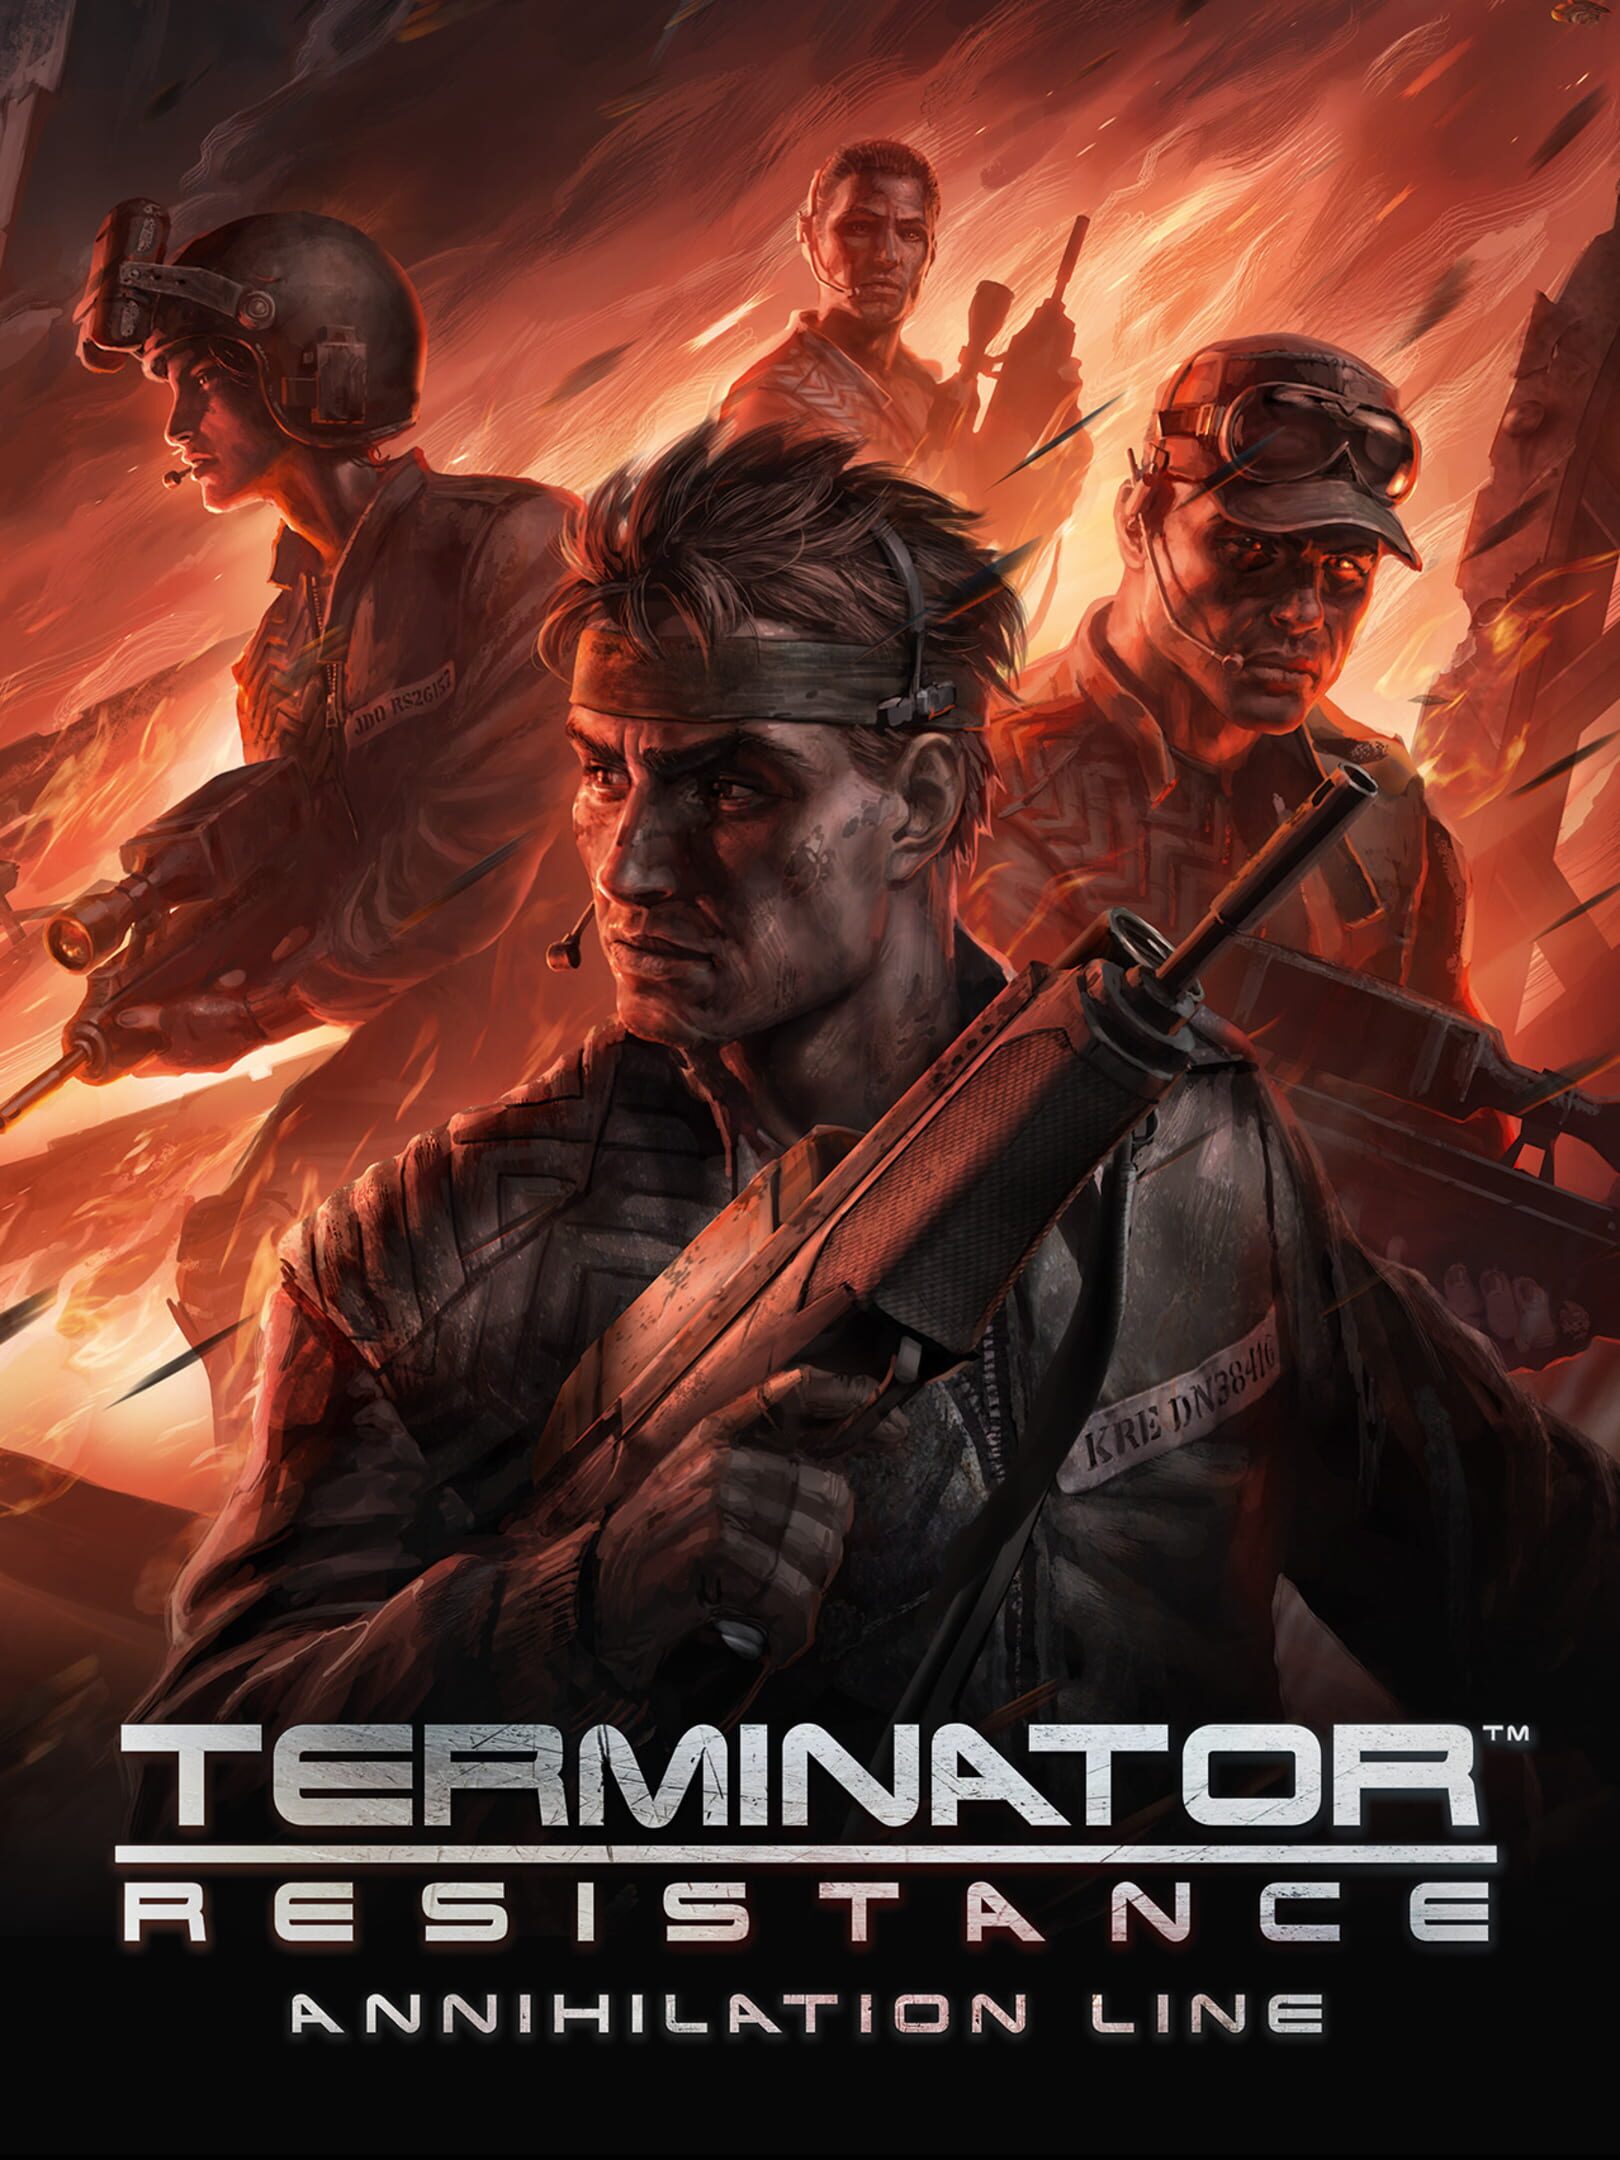 Terminator annihilation. Терминатор Resistance Annihilation line. Terminator Annihilation line. Terminator Resistance 2019. Терминатор резистанс Джейкоб Риверс Терминатор.